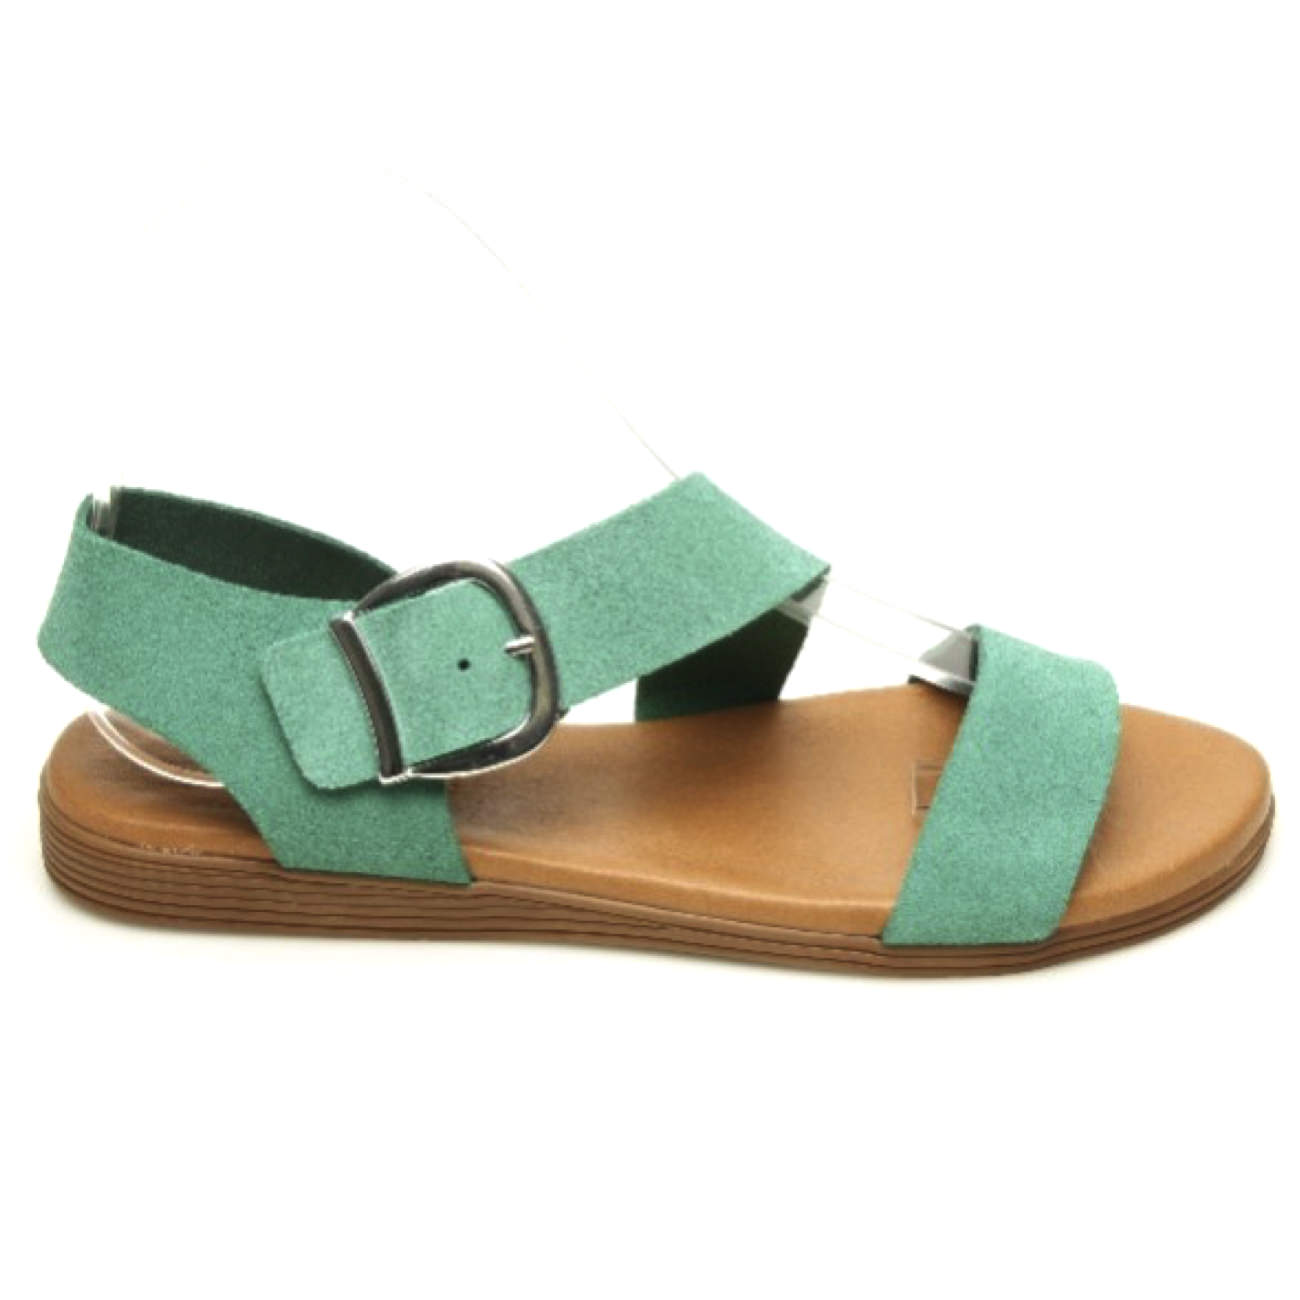 Marila, SS21, P-2411, Sandal, Leather, Green Sandals Marila Green 36 